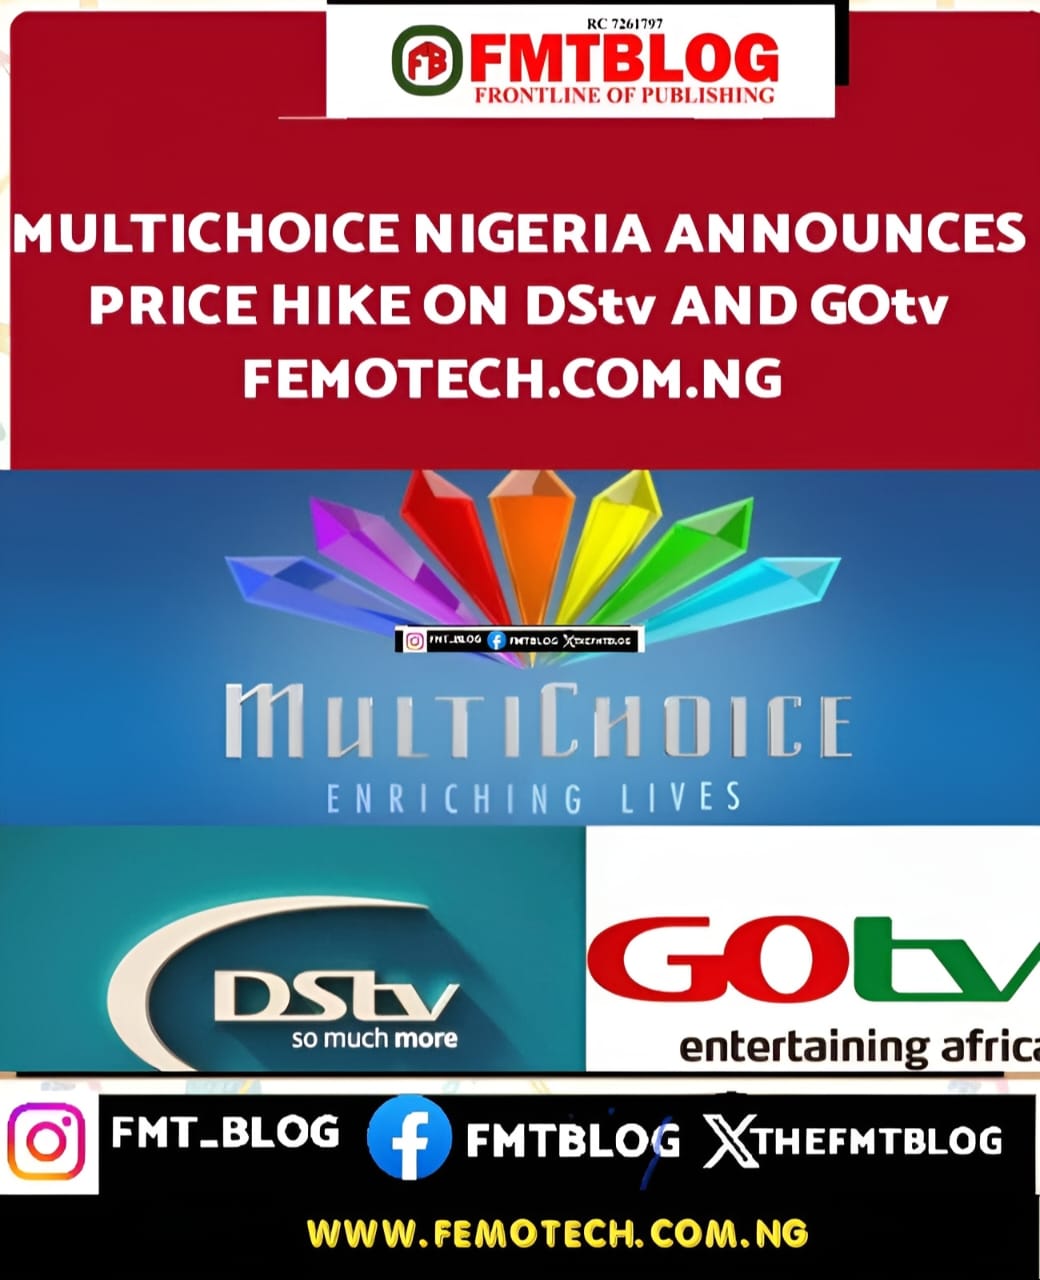 Multichoice Nigeria Announces Price Hike On DStv And GOtv